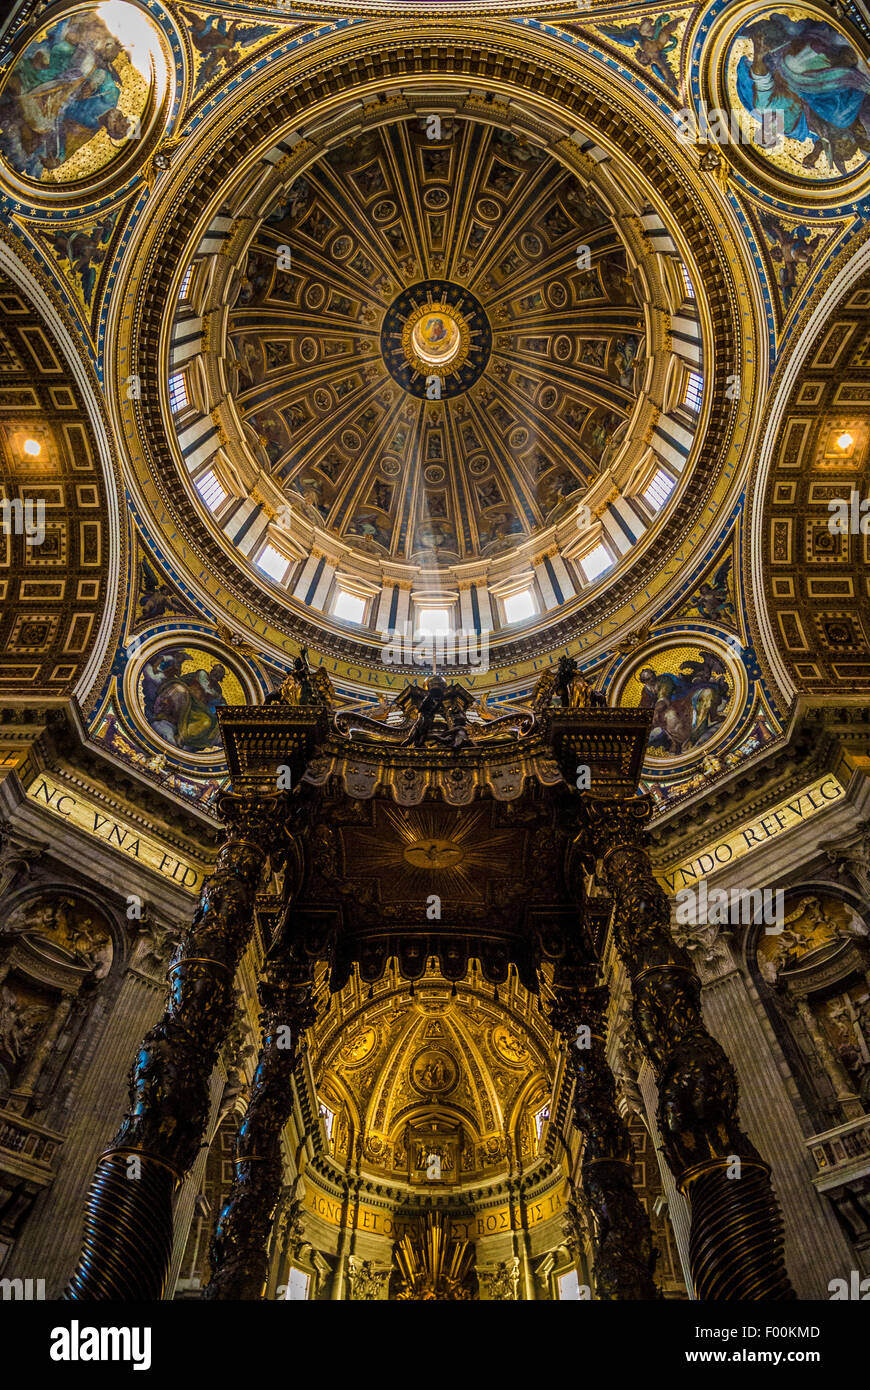 Bernini's baldachin and dome of St Peter's Basilica. Vatican City, Rome. Italy. Stock Photo